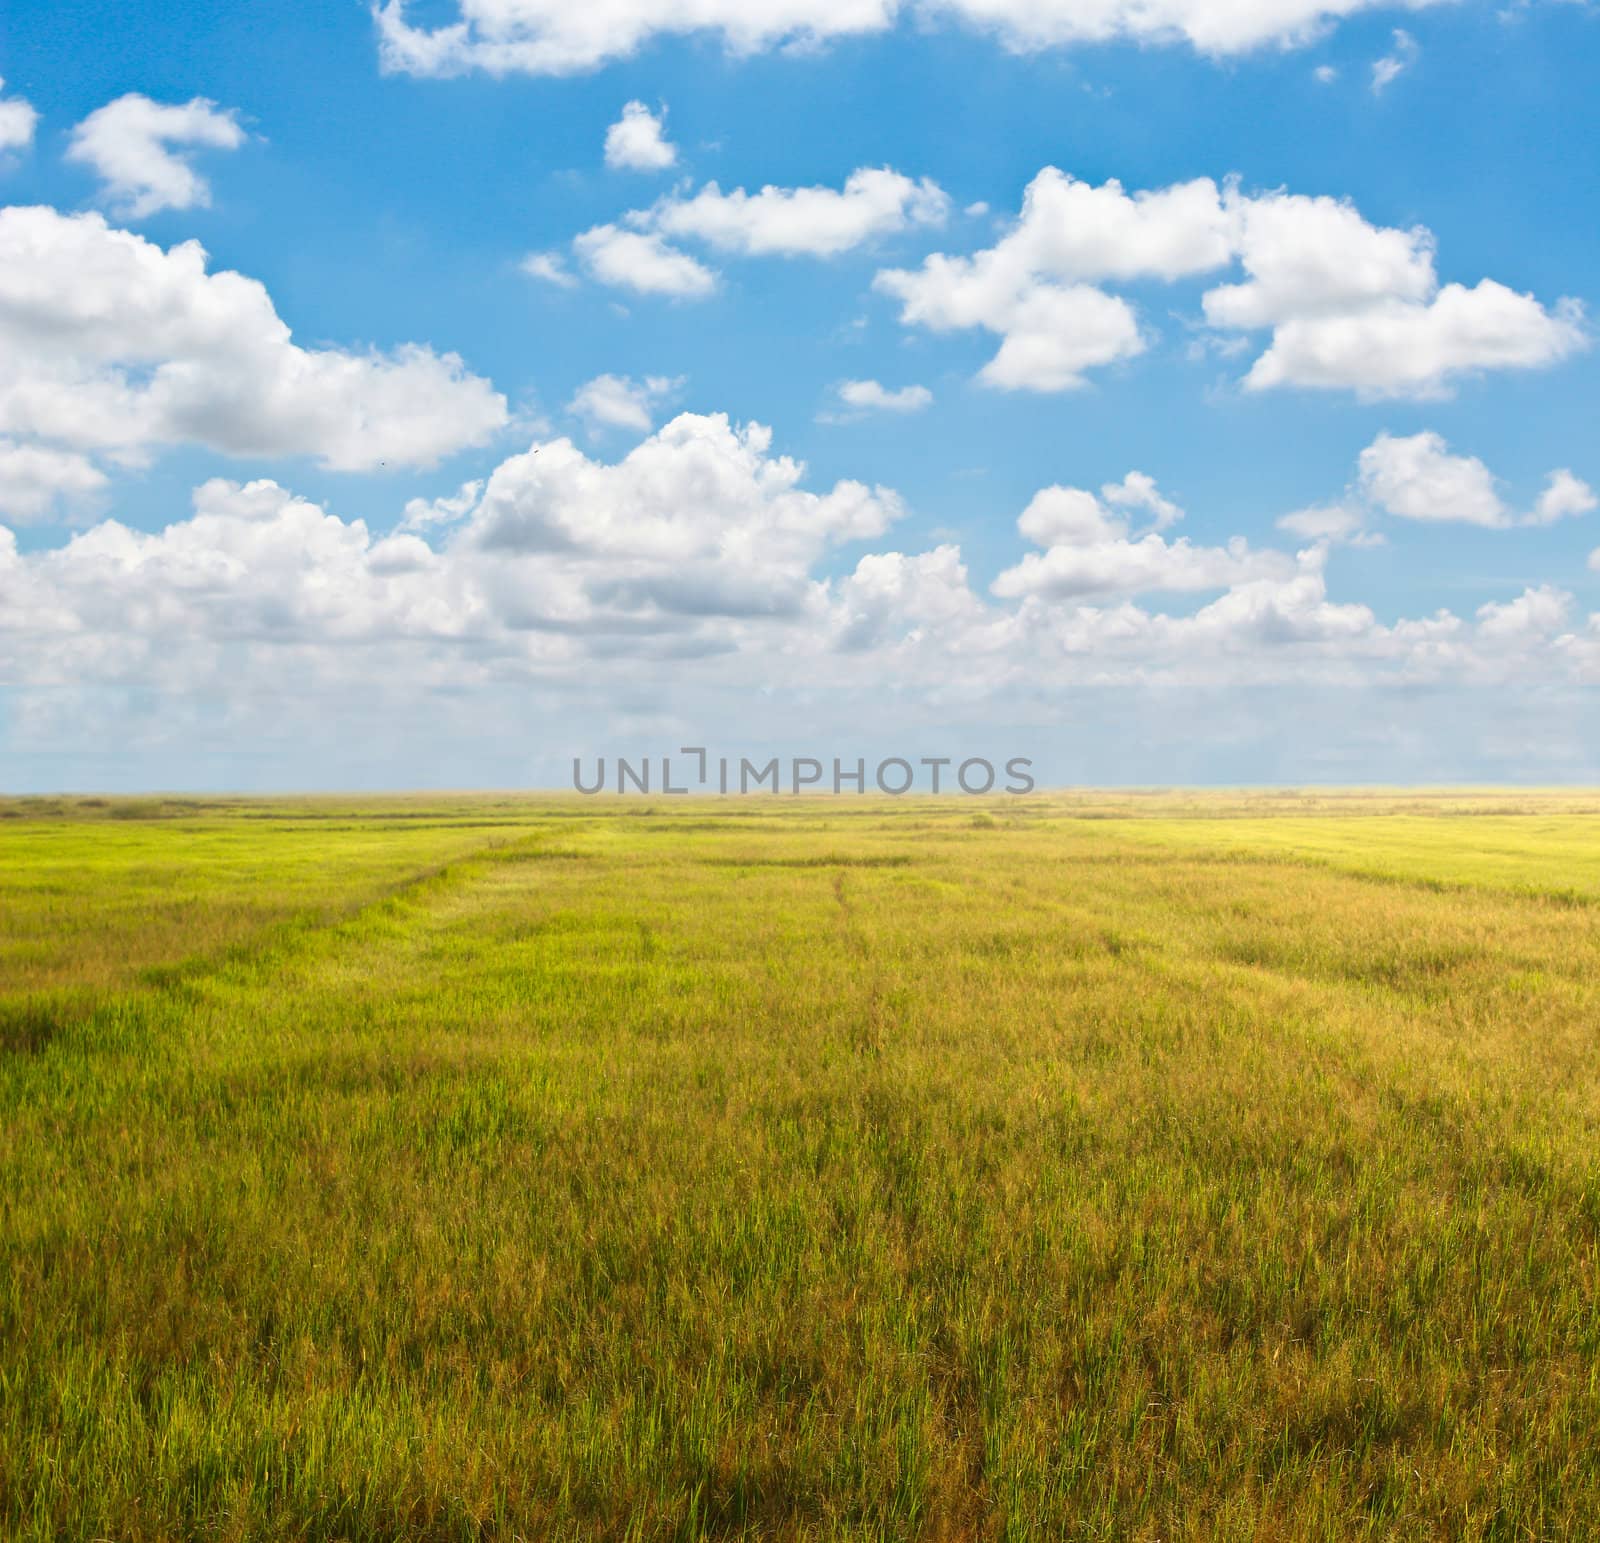 addy field with beautiful blue sky